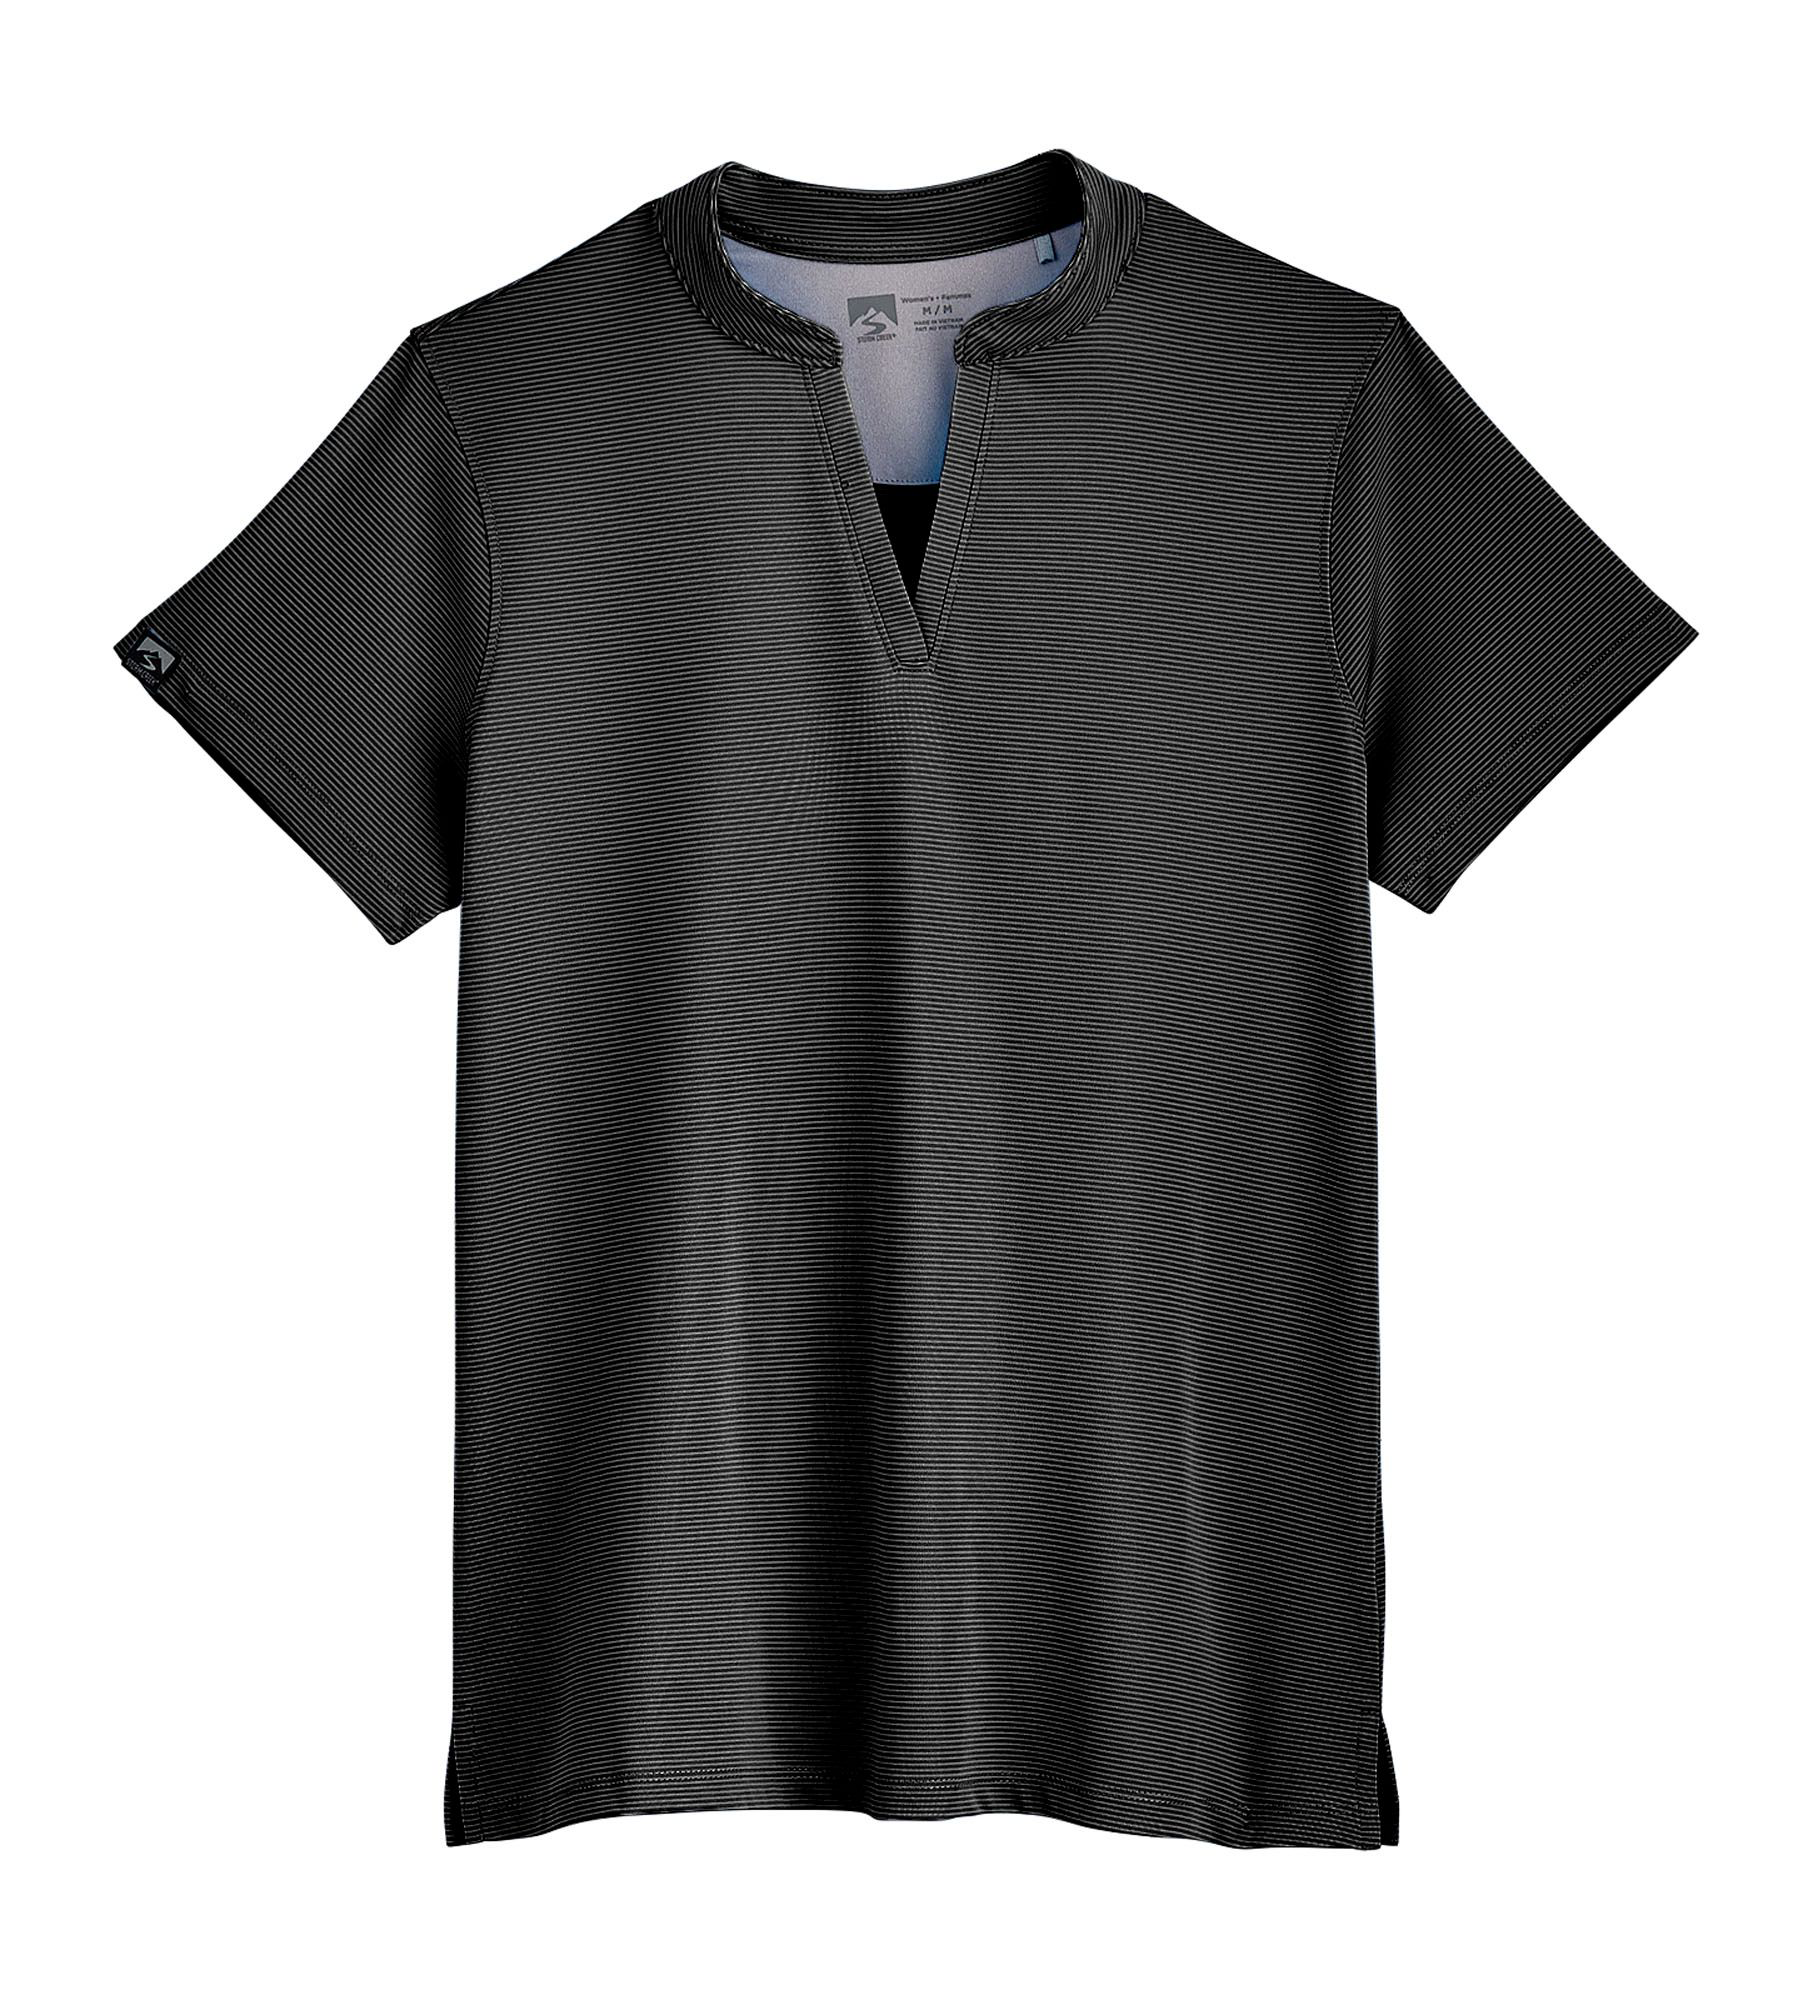 Storm Creek Optimist Short-Sleeve Polo Shirt for Ladies - Black - L